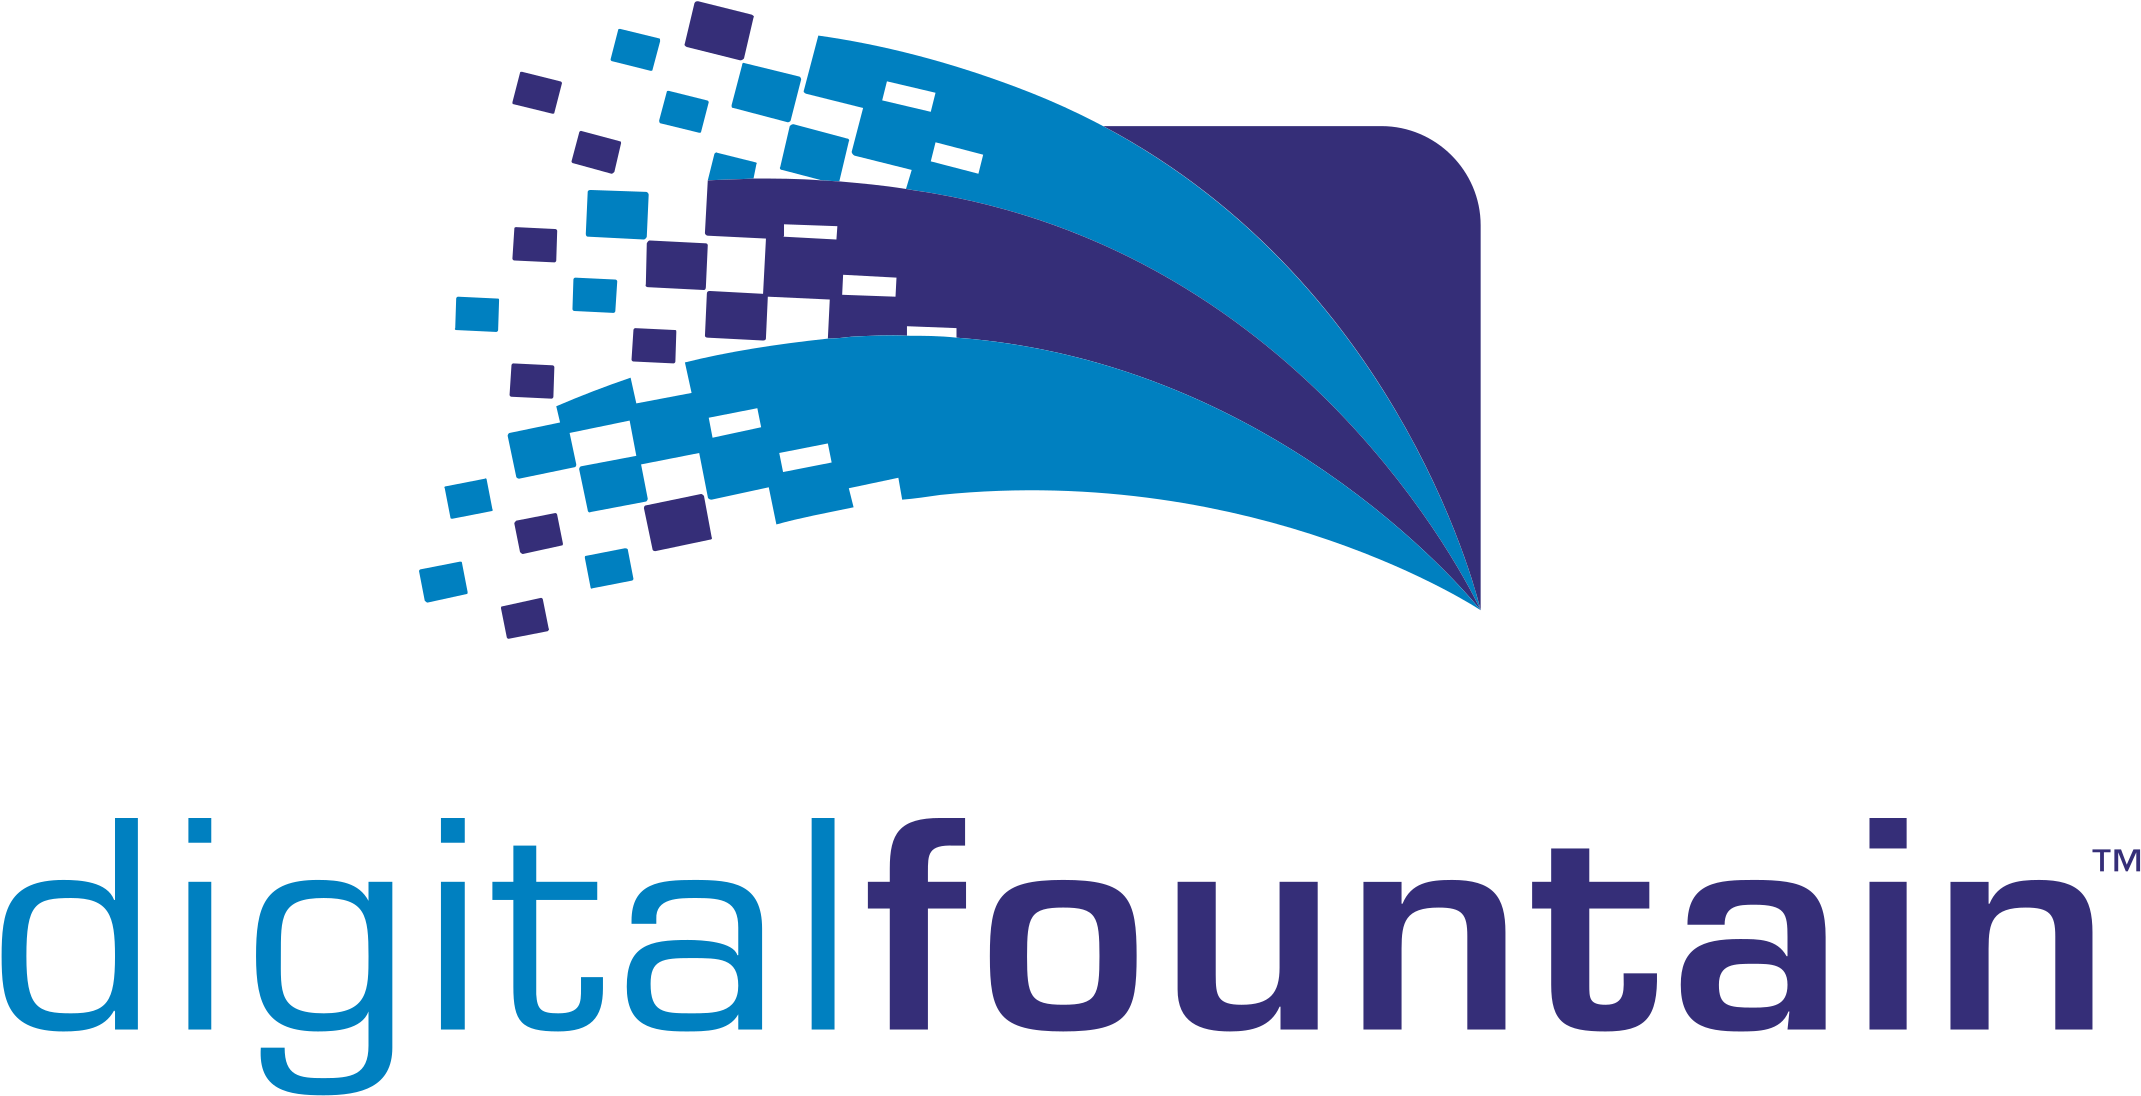 Digital Fountain Logo Png Transparent - Digital Fountain (2400x2400), Png Download